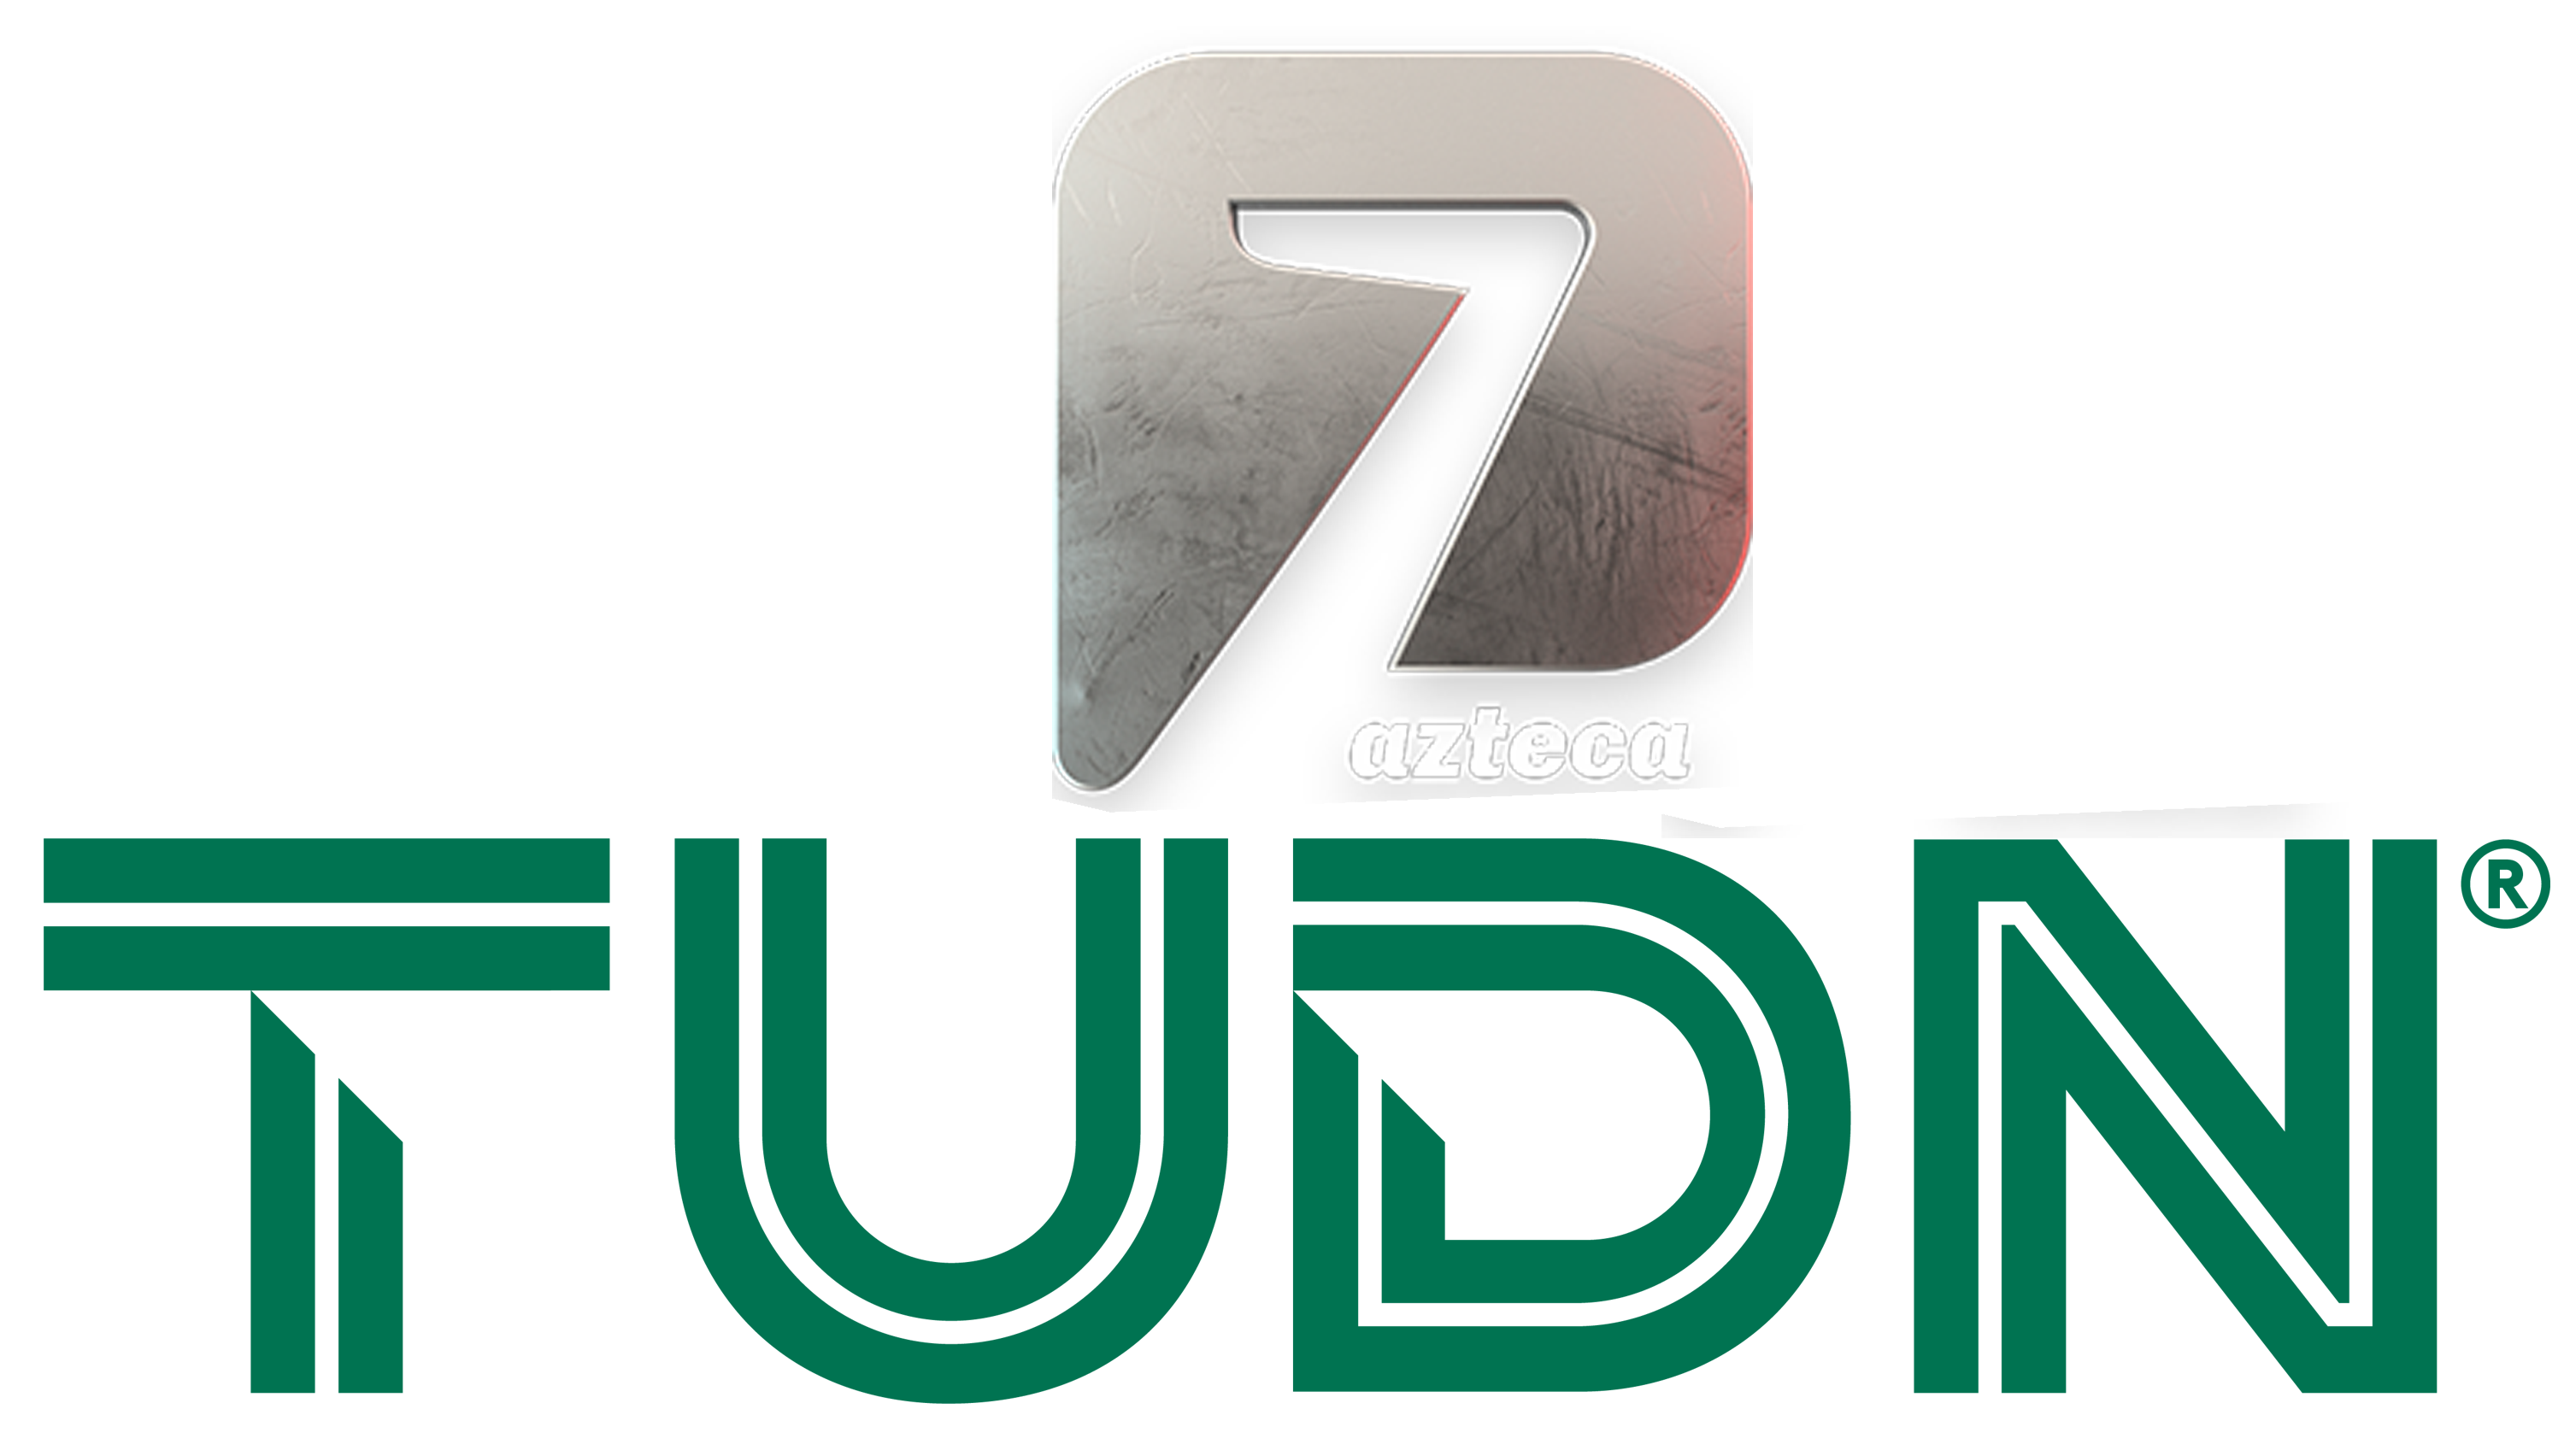 Azteca 7 | TUDN